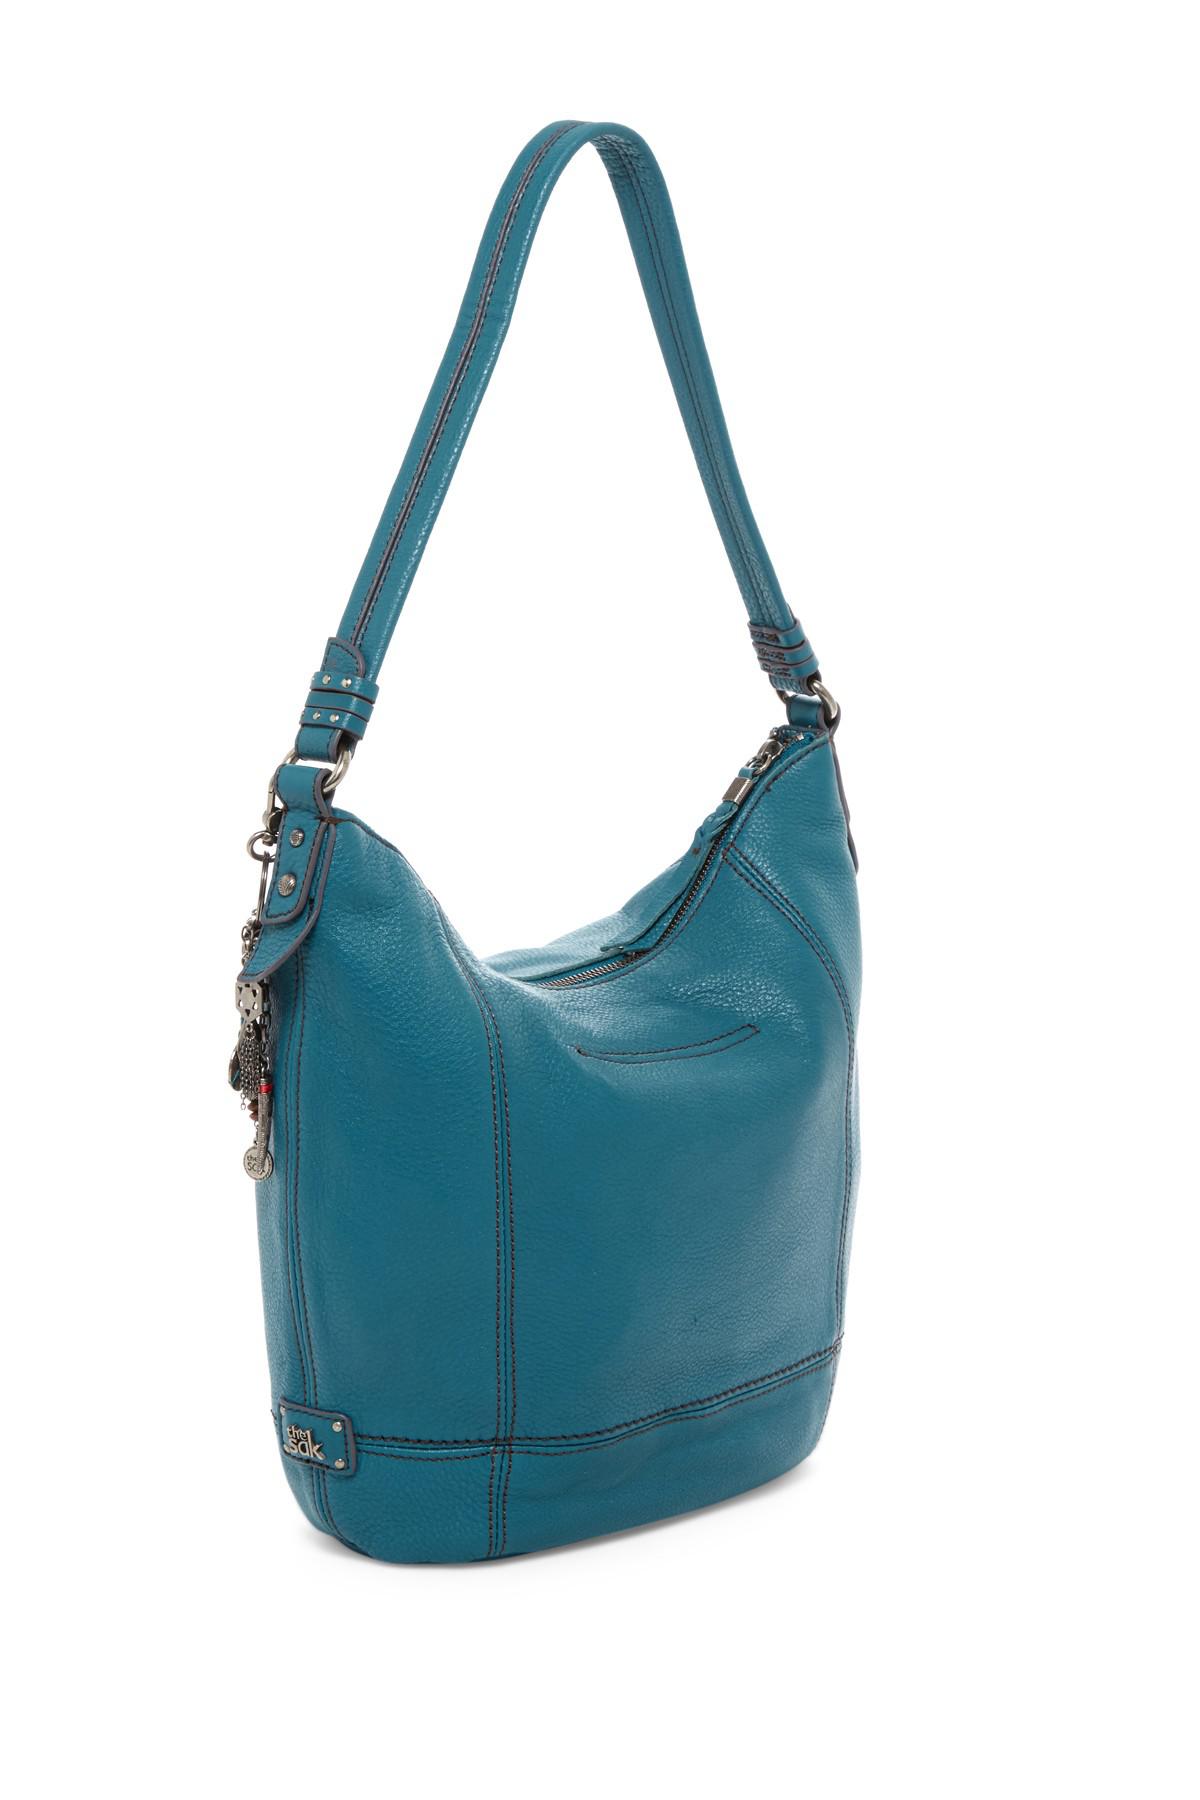 The Sak Sequoia Leather Hobo Bag in Azure (Blue) - Lyst